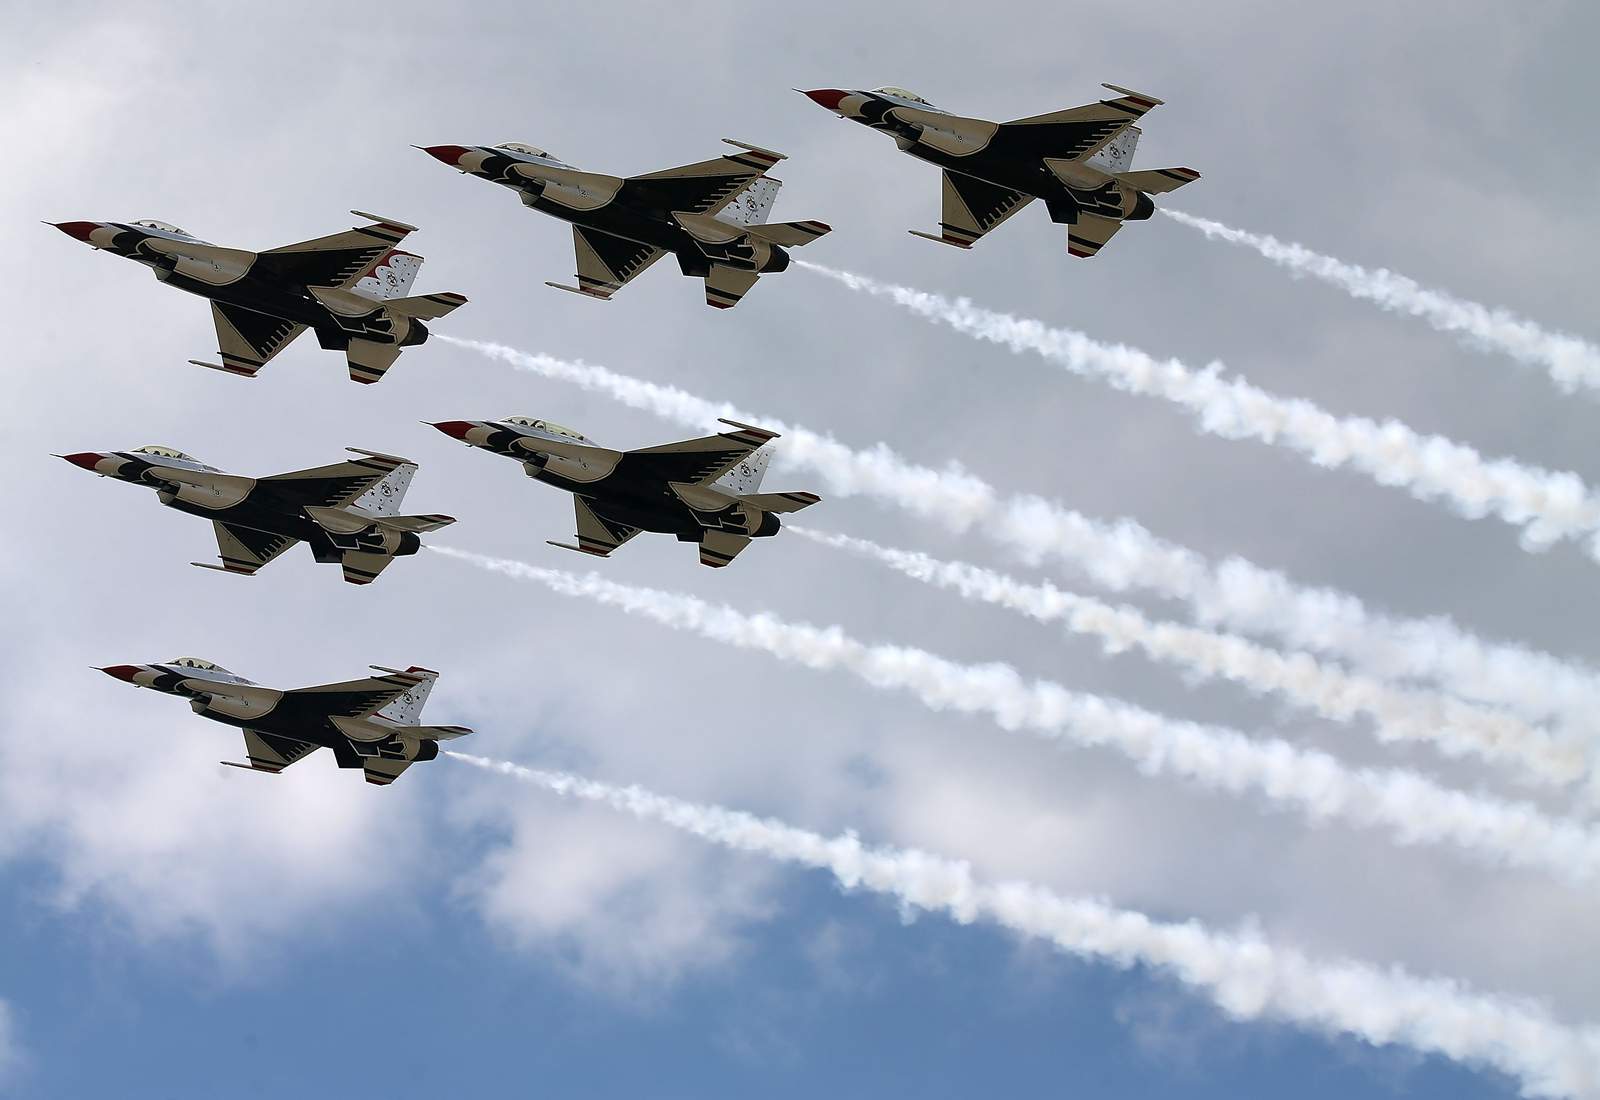 US Air Force Thunderbirds soar into Sanford ahead of weekend air show